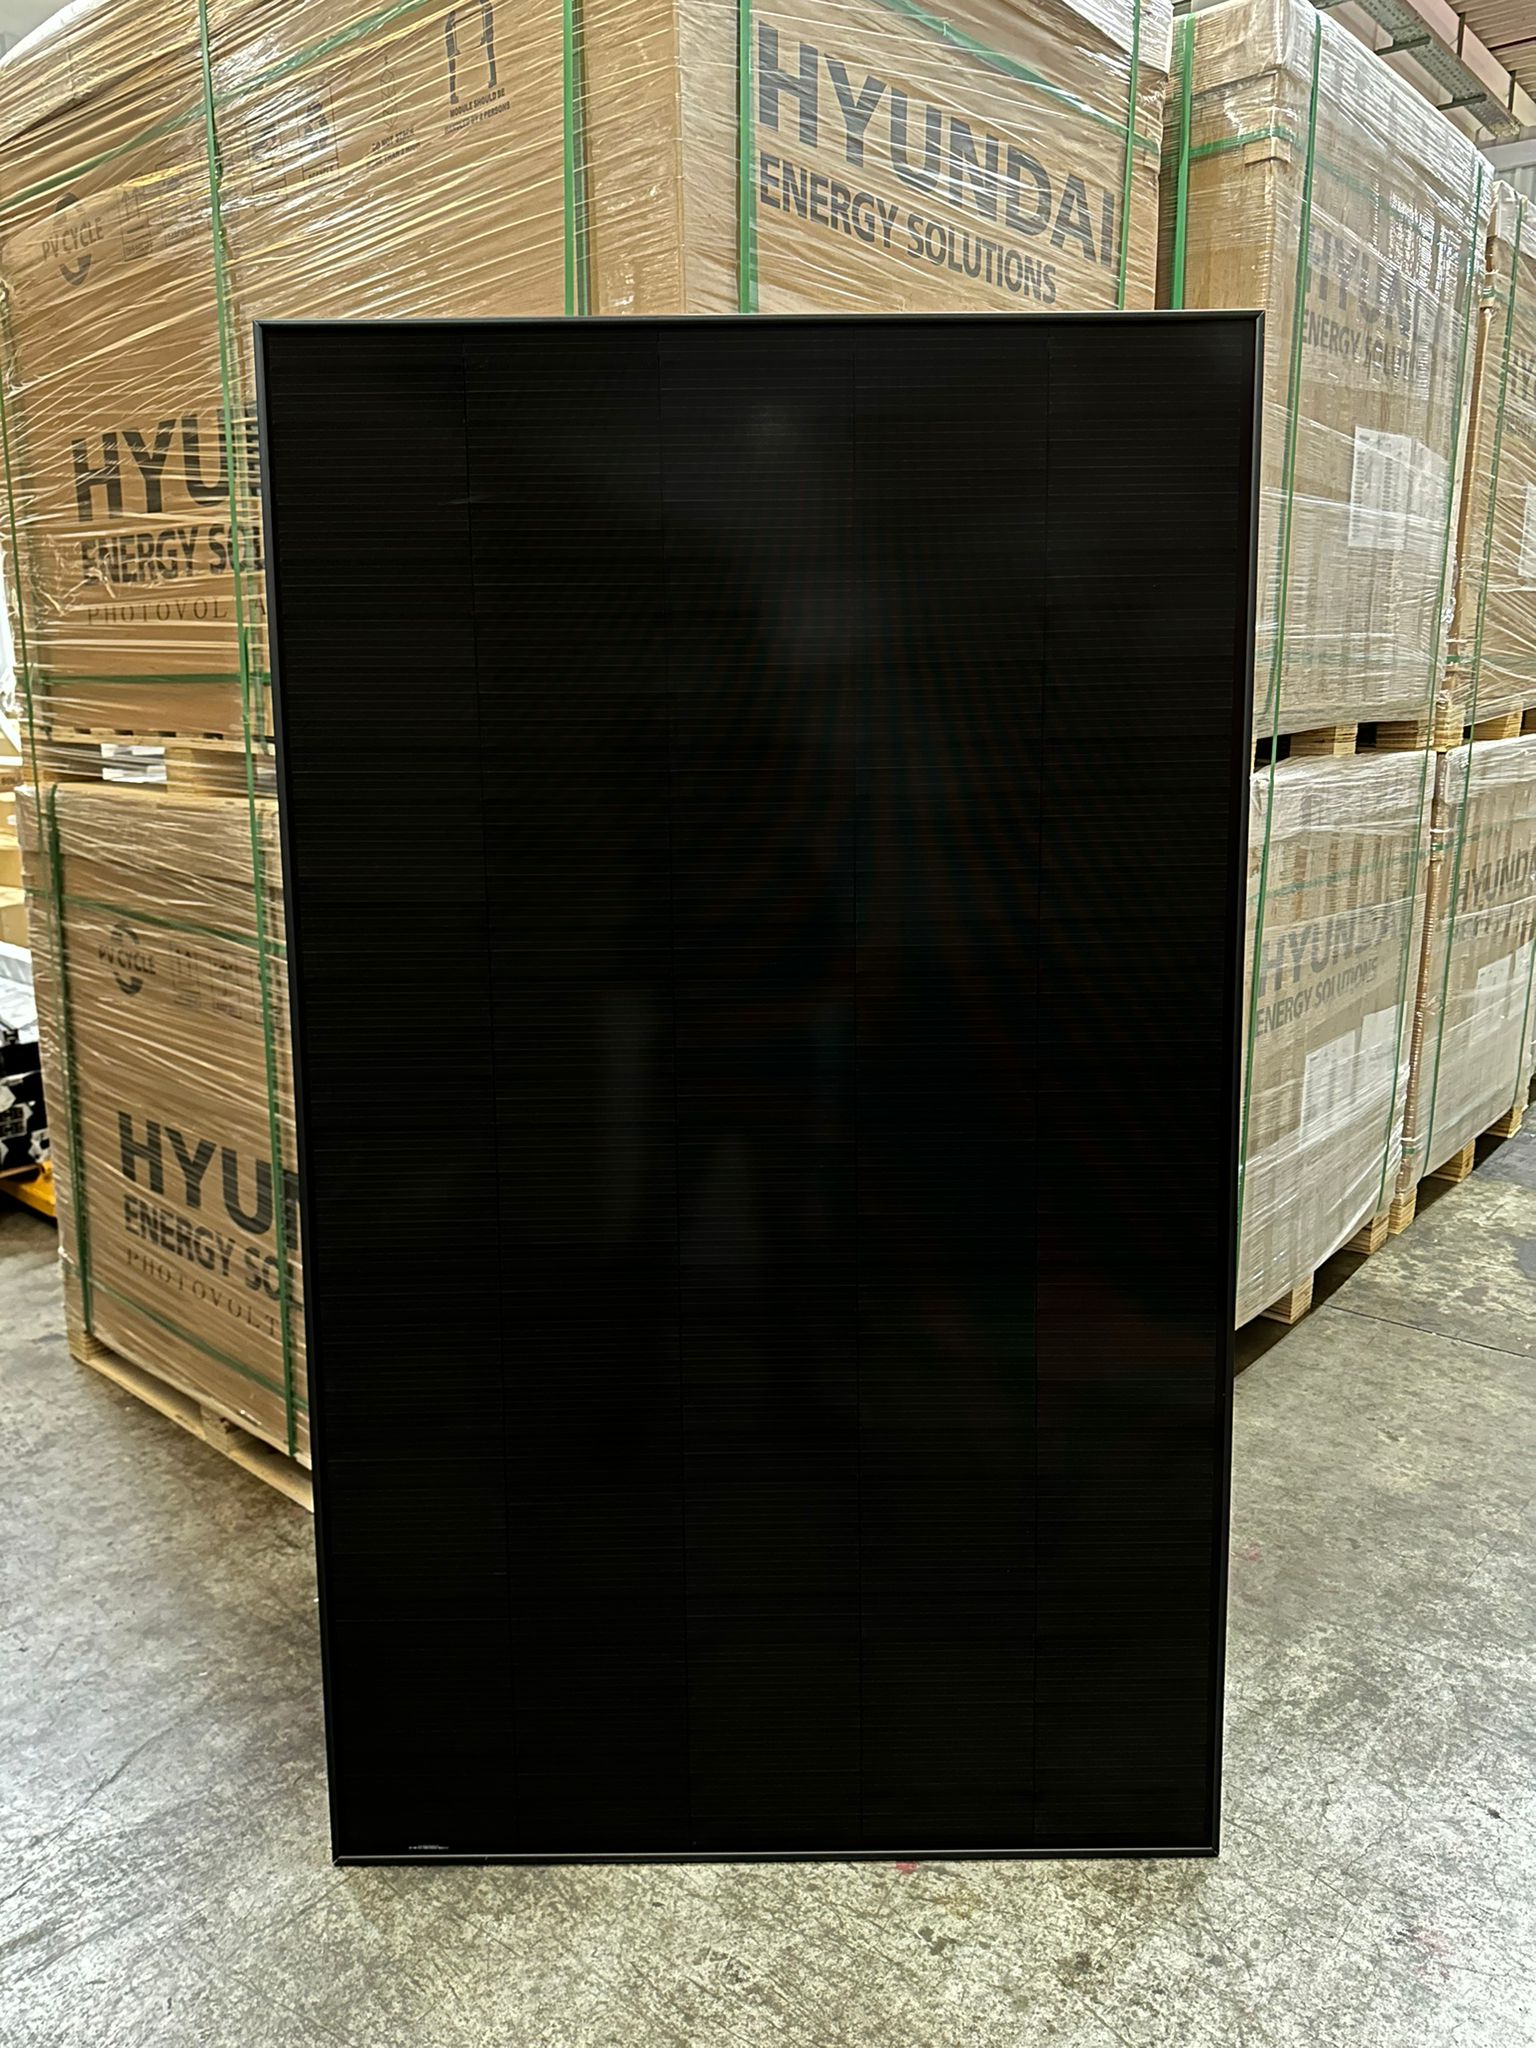 10 kW Photovoltaikanlage Set 24 x HYUNDAI FULL BLACK SHINGLED Solarmodule + 10kW HUAWEI Hybrid Wechselrichter SUN2000-10KTL-M1-HC